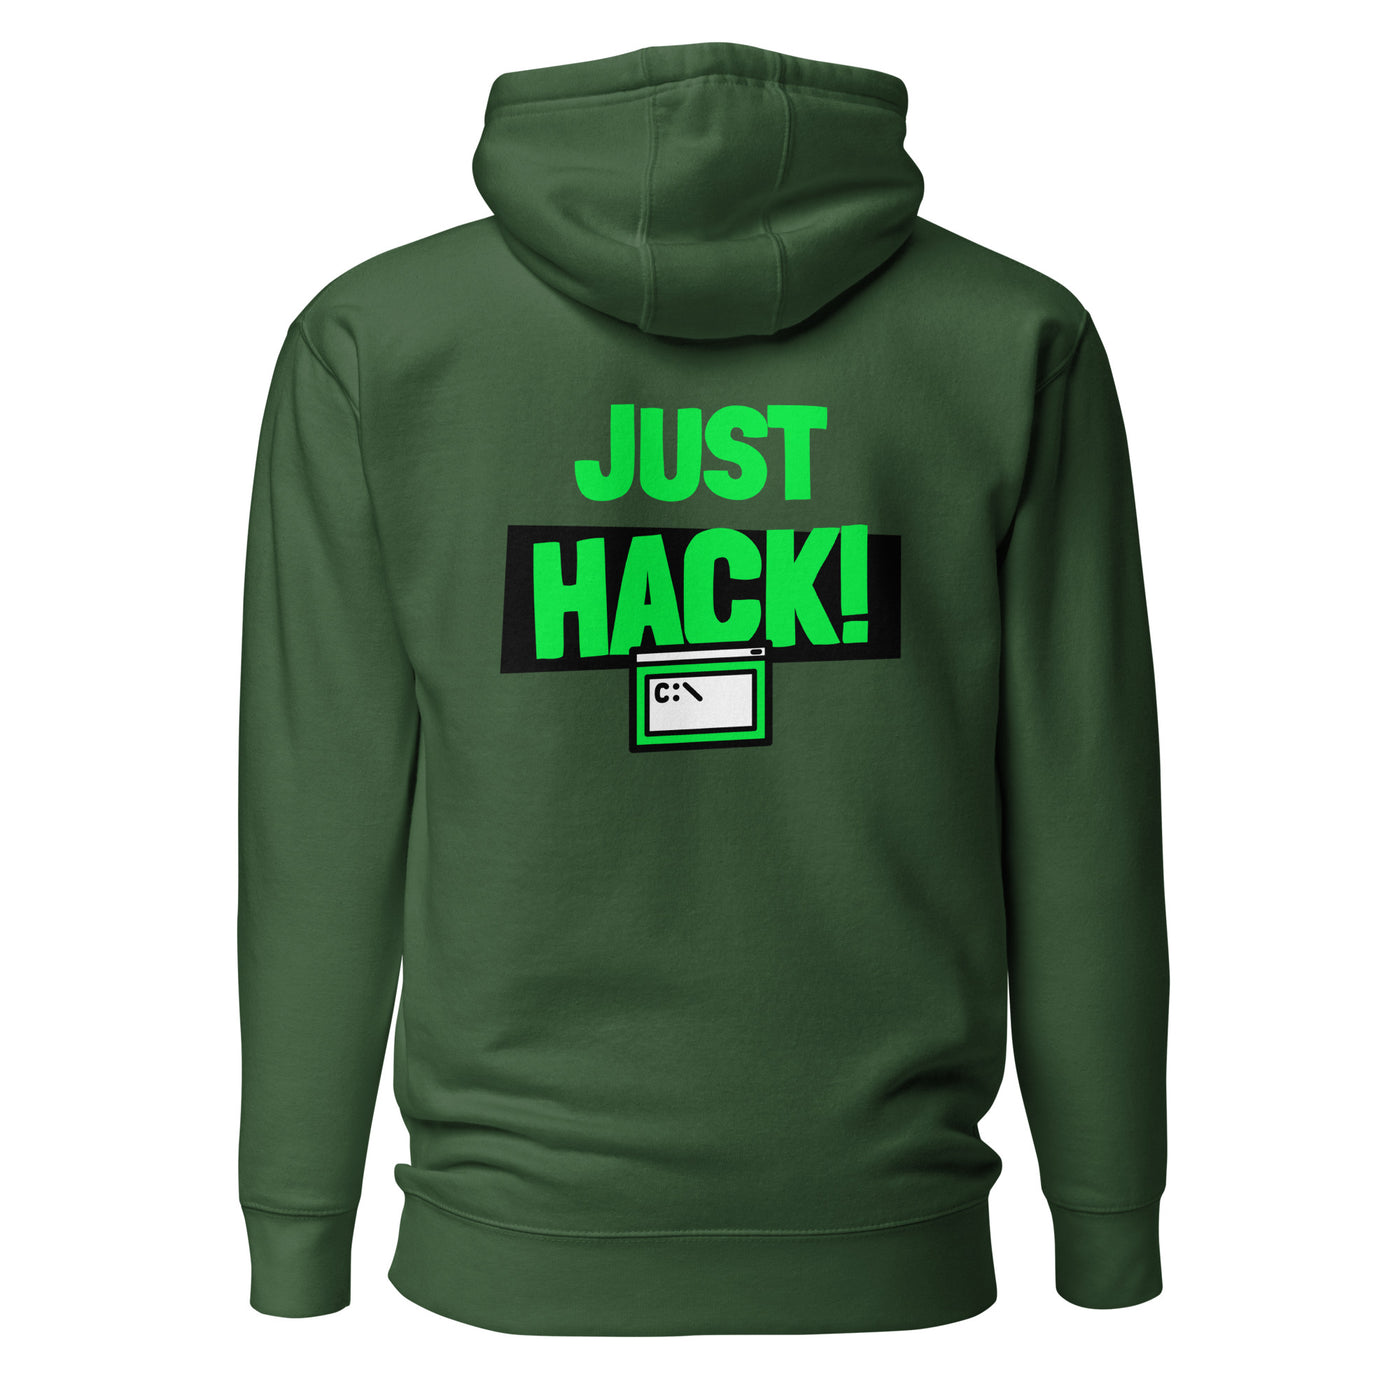 Just Hack (Green text) - Unisex Hoodie (back print)